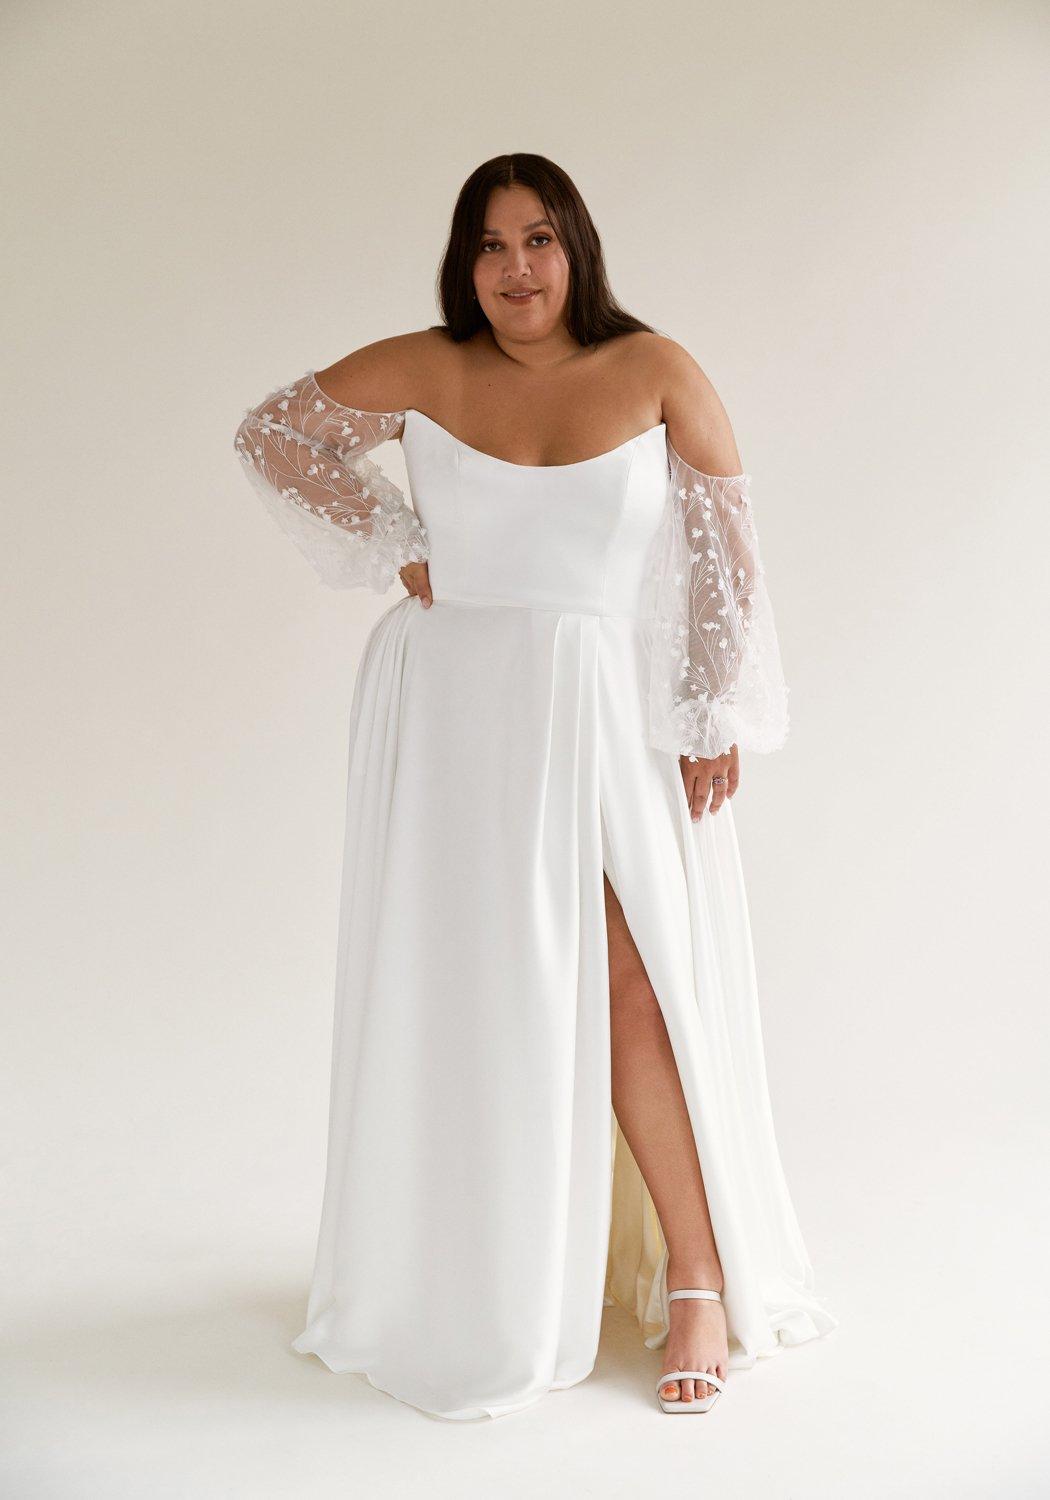 Plus Size Black Wedding Dress Ideas For Curvy Brides + FAQs